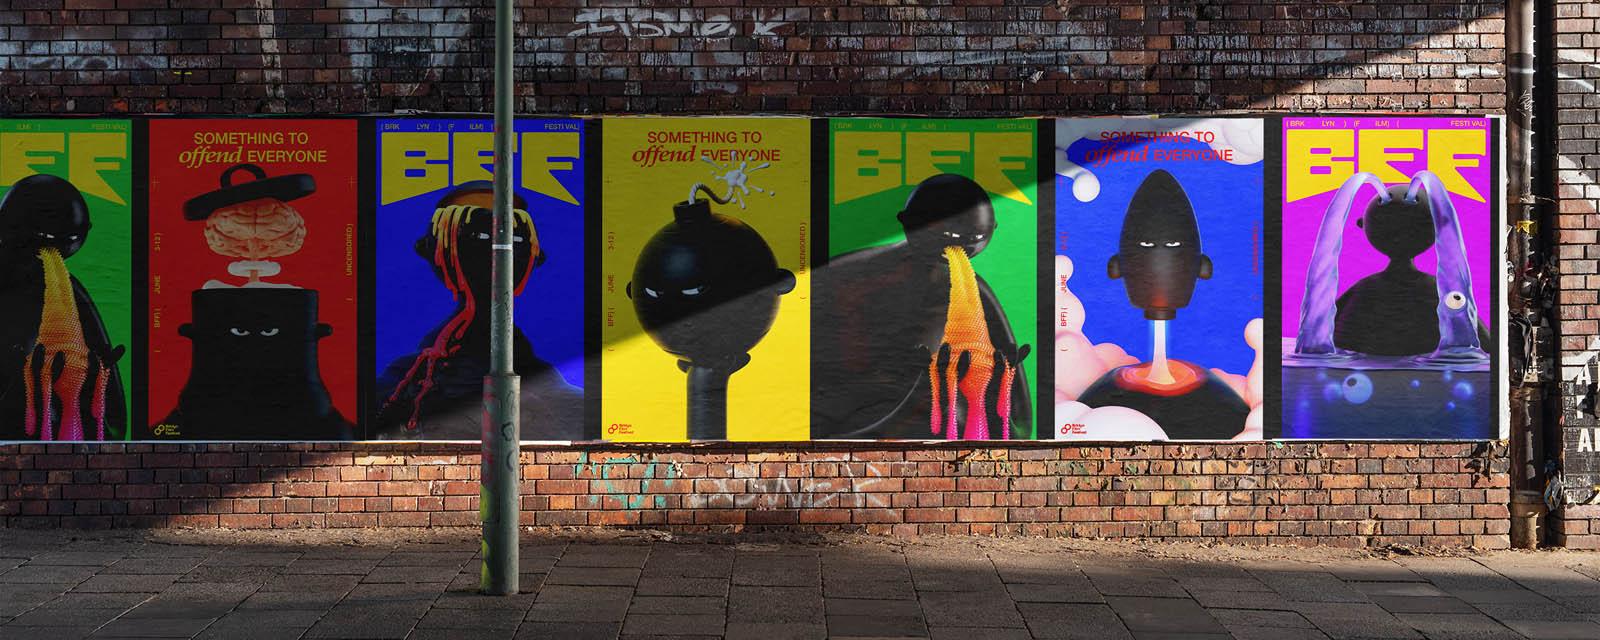 BFF in-situ posters